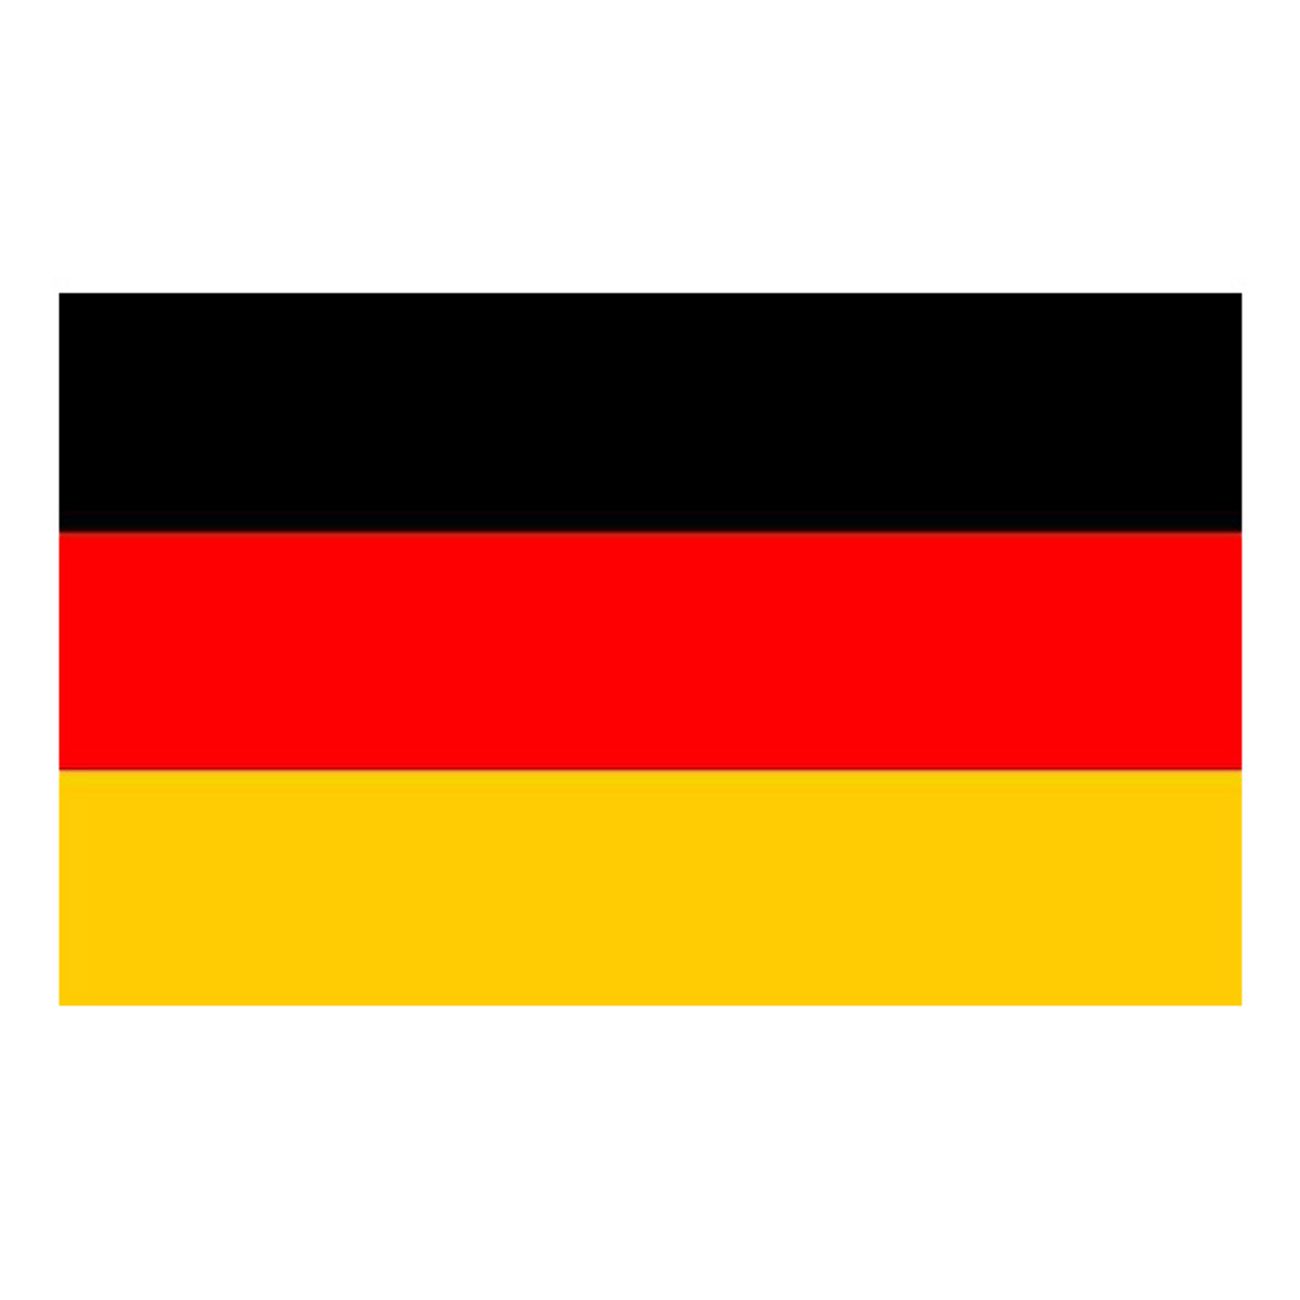 flagga-tyskland-1